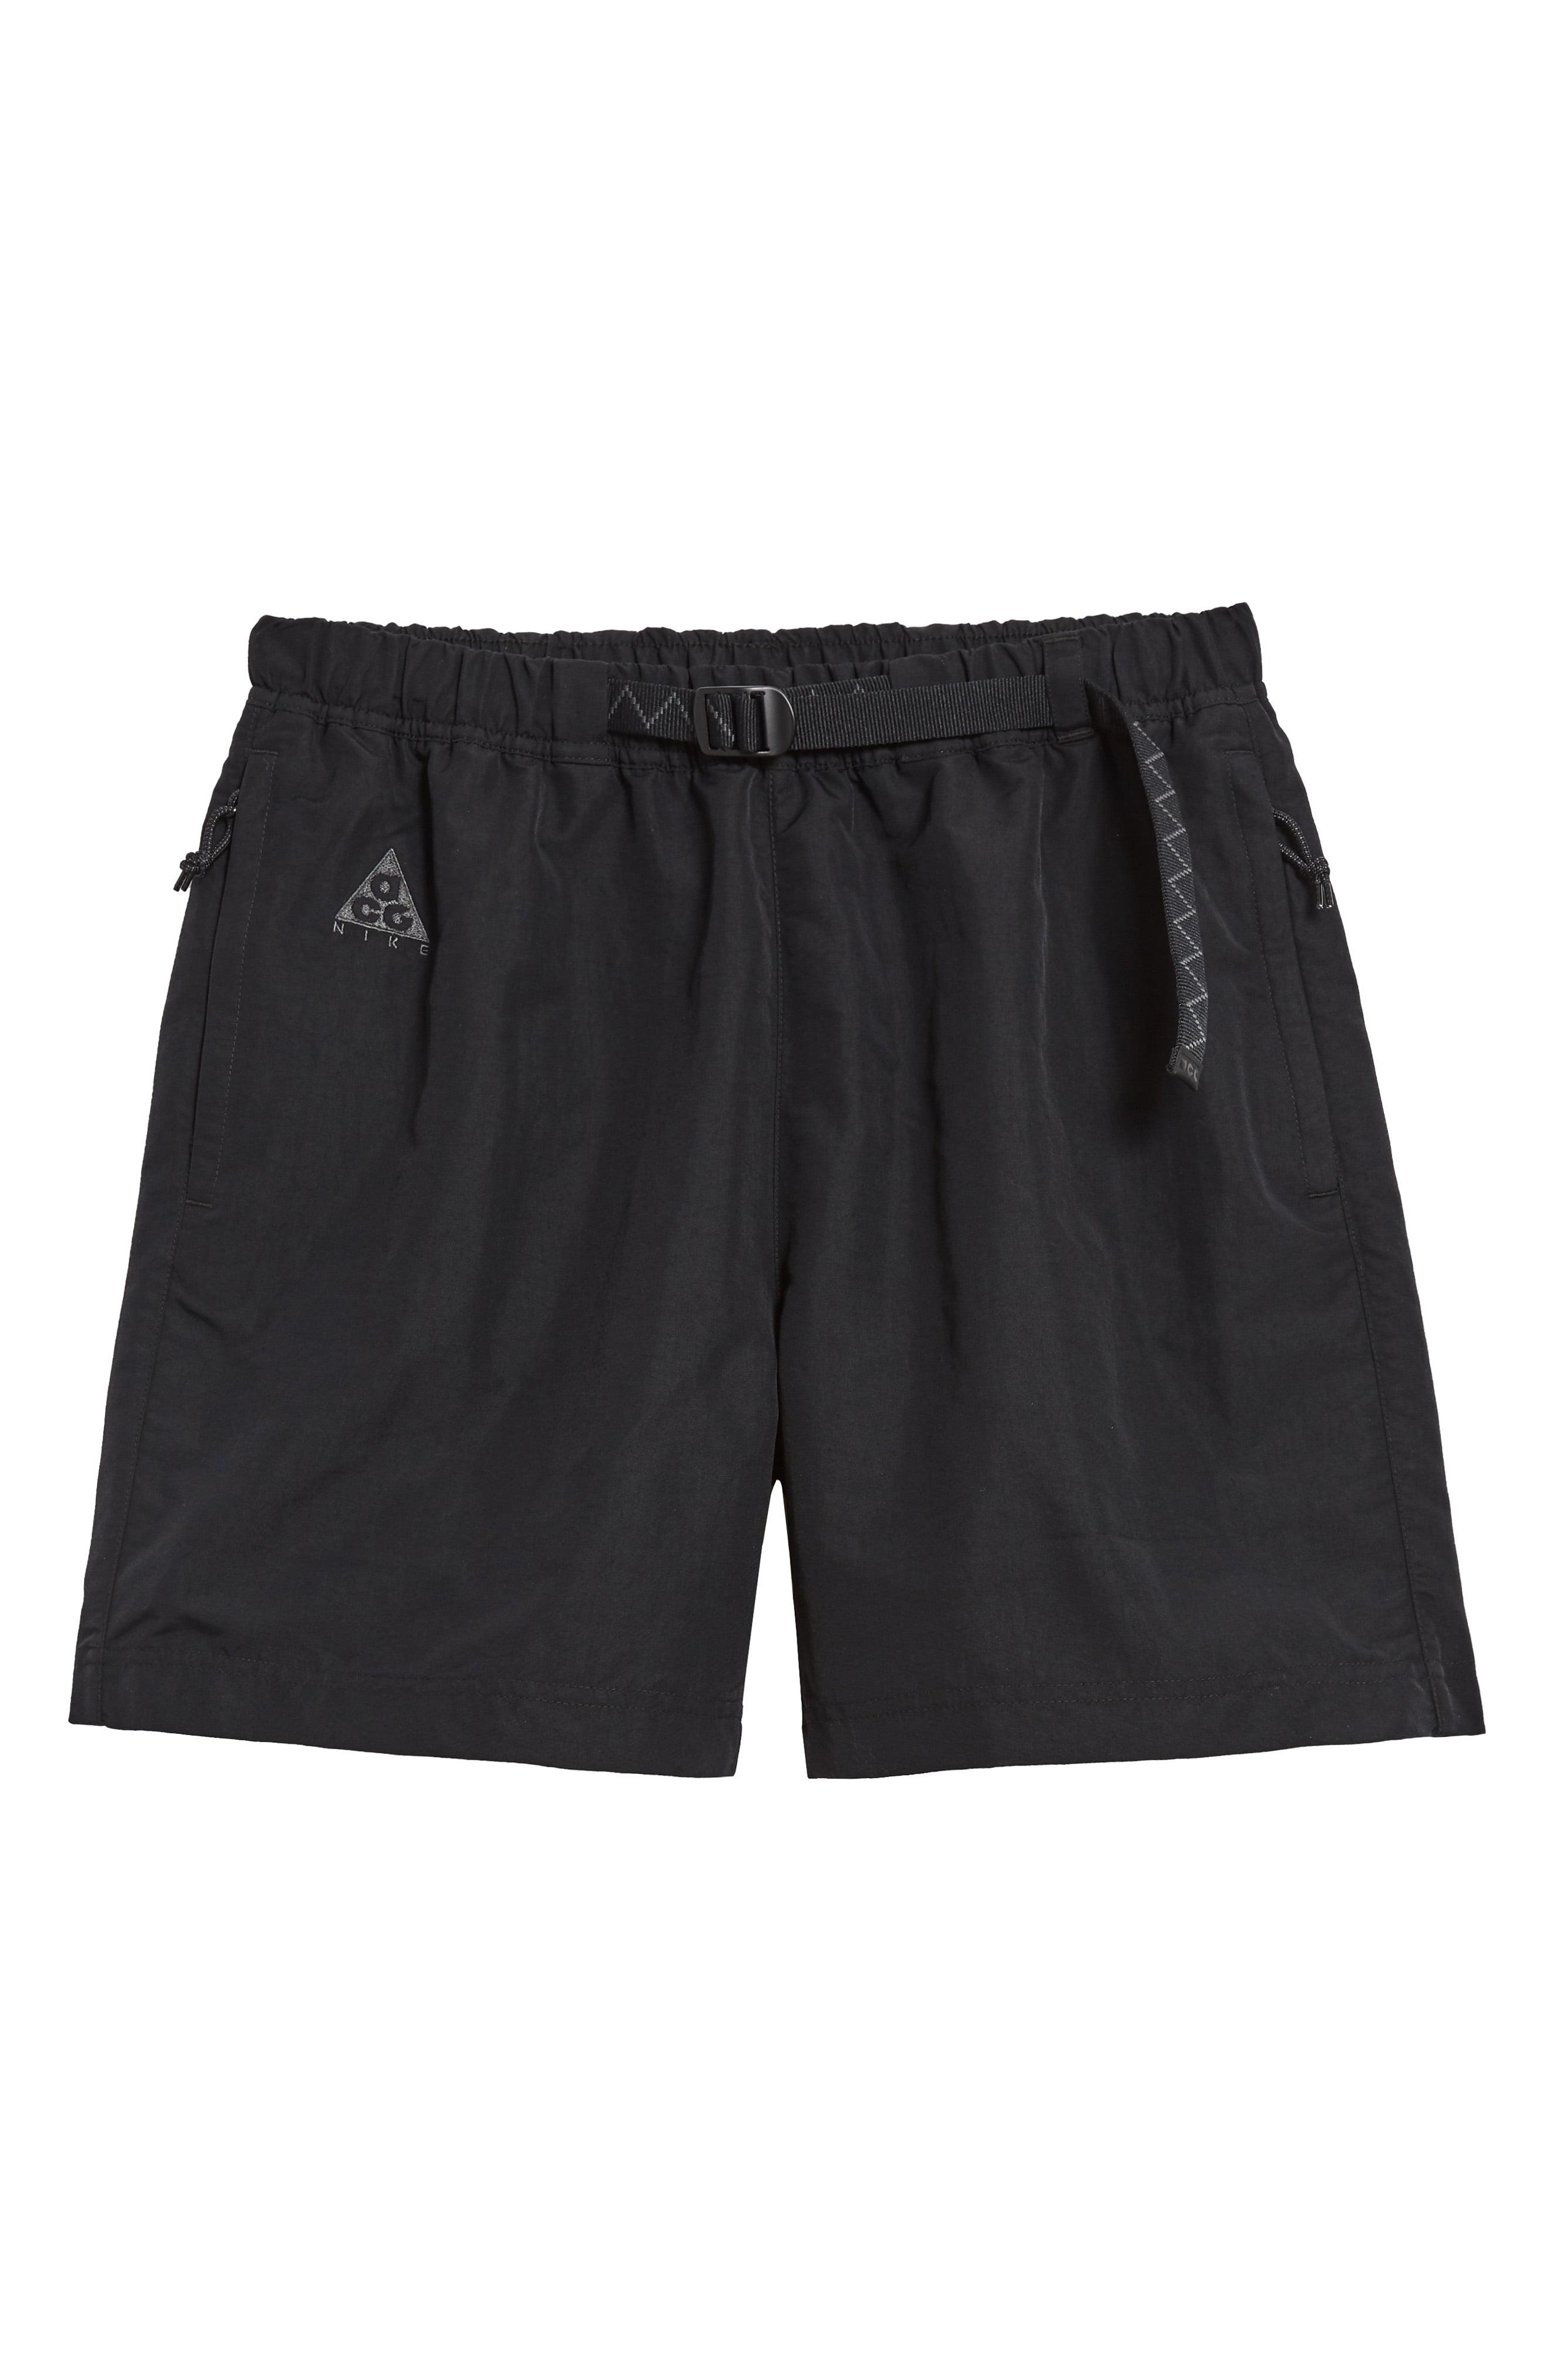 Nike Acg Woven Shorts in Black for Men - Lyst